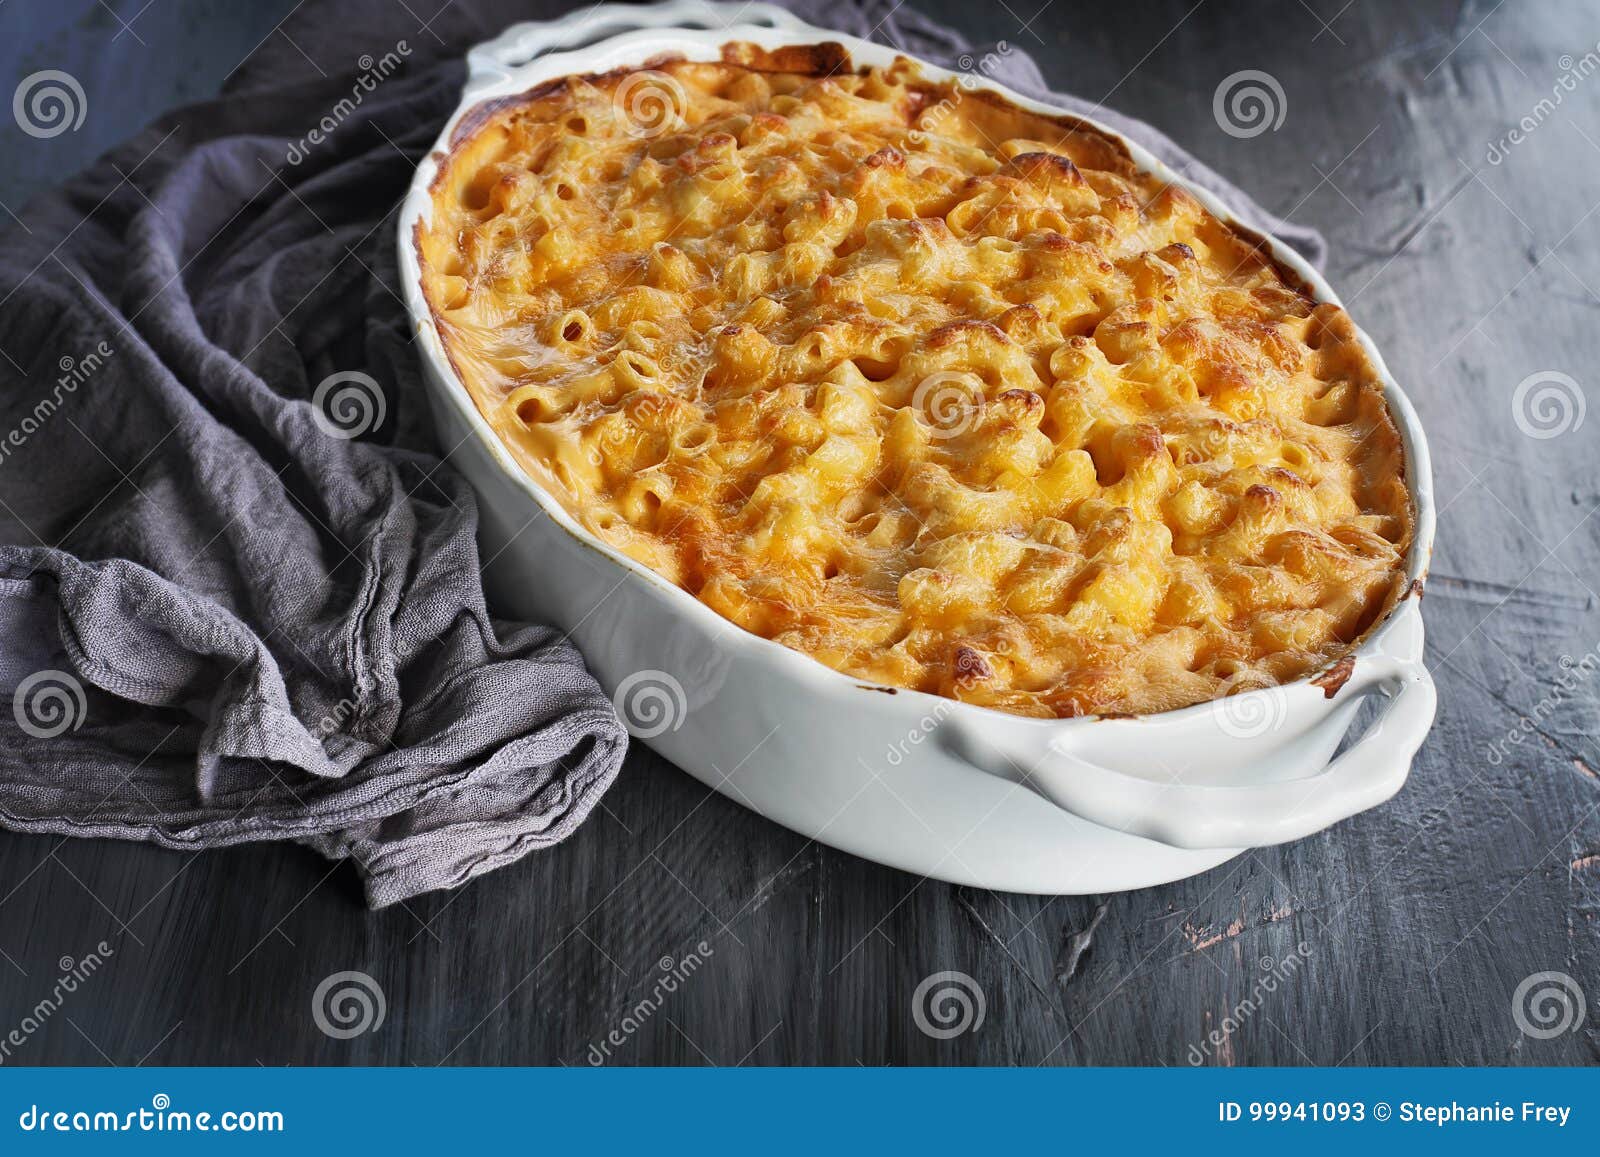 fresh baked macaroni and cheese